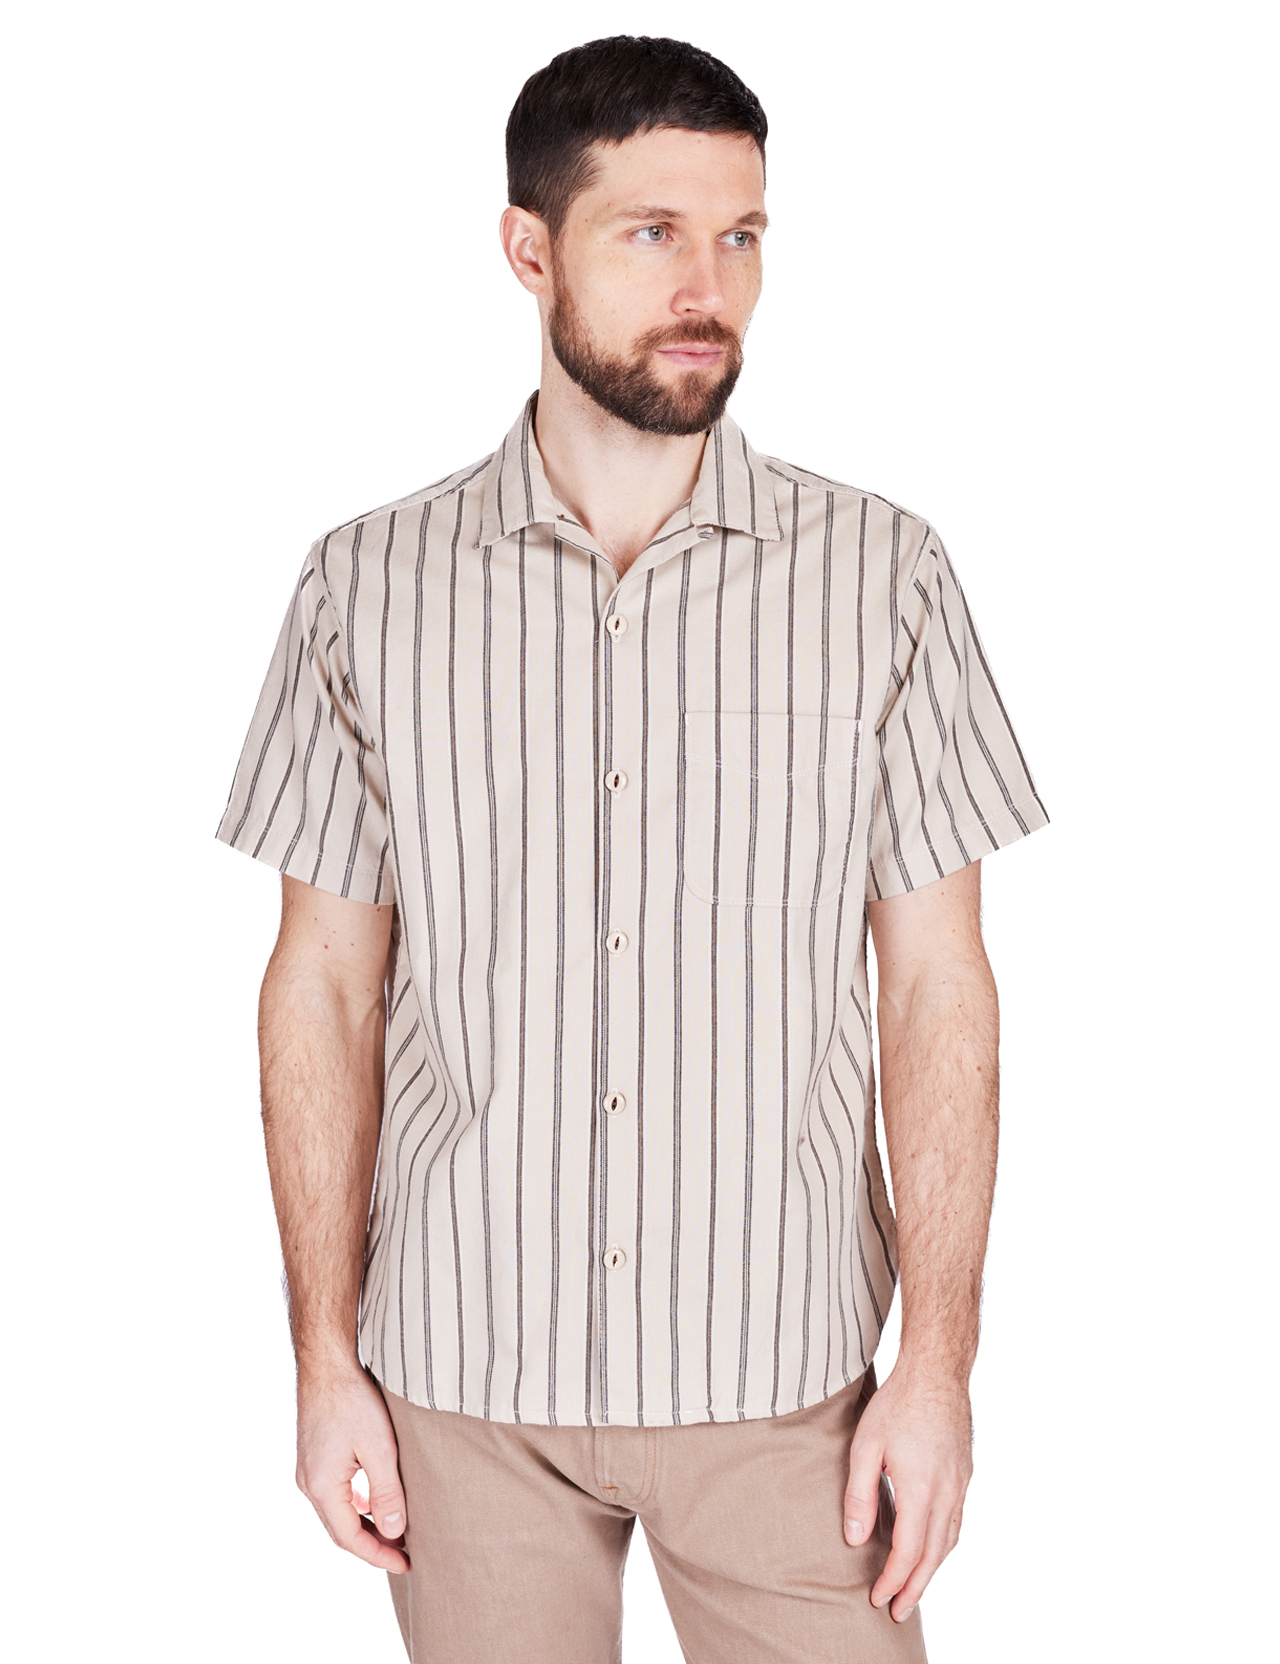 Freenote-Cloth---Hawaiian-Shirt---Stone-Stripe11